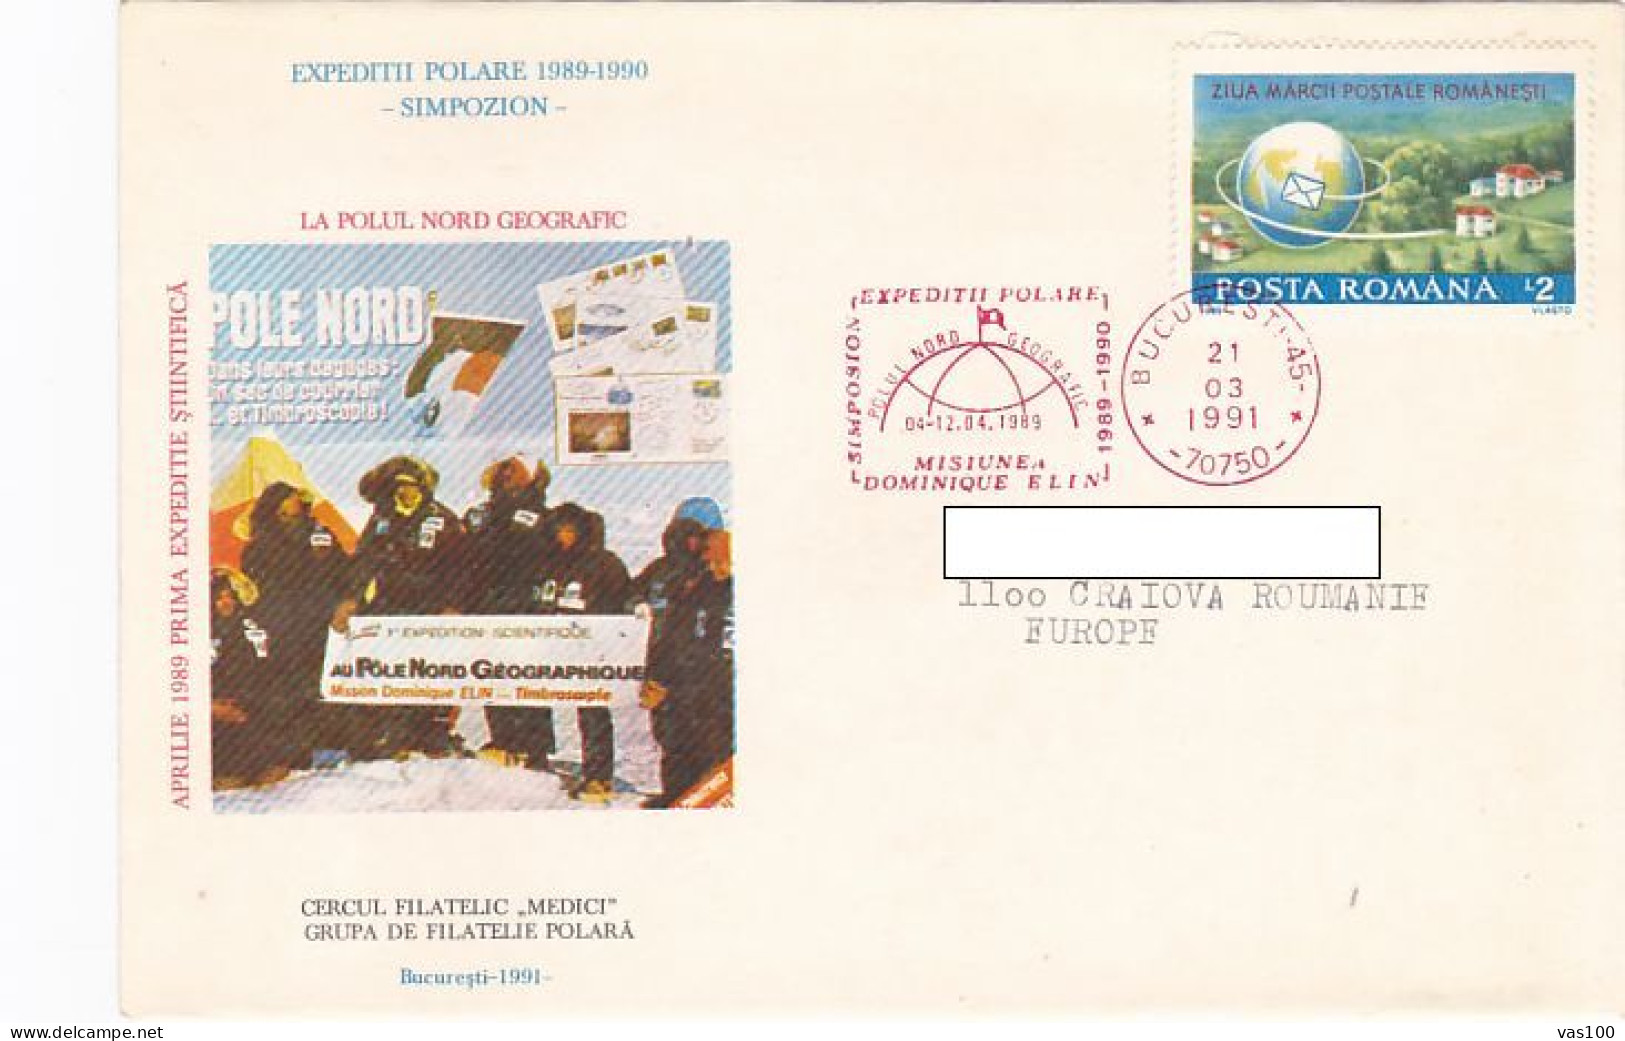 NORTH POLE, ARCTIC EXPEDITION, DOMINIQUE ELIN AT NORTH POLE, SPECIAL COVER, 1991, ROMANIA - Arctische Expedities